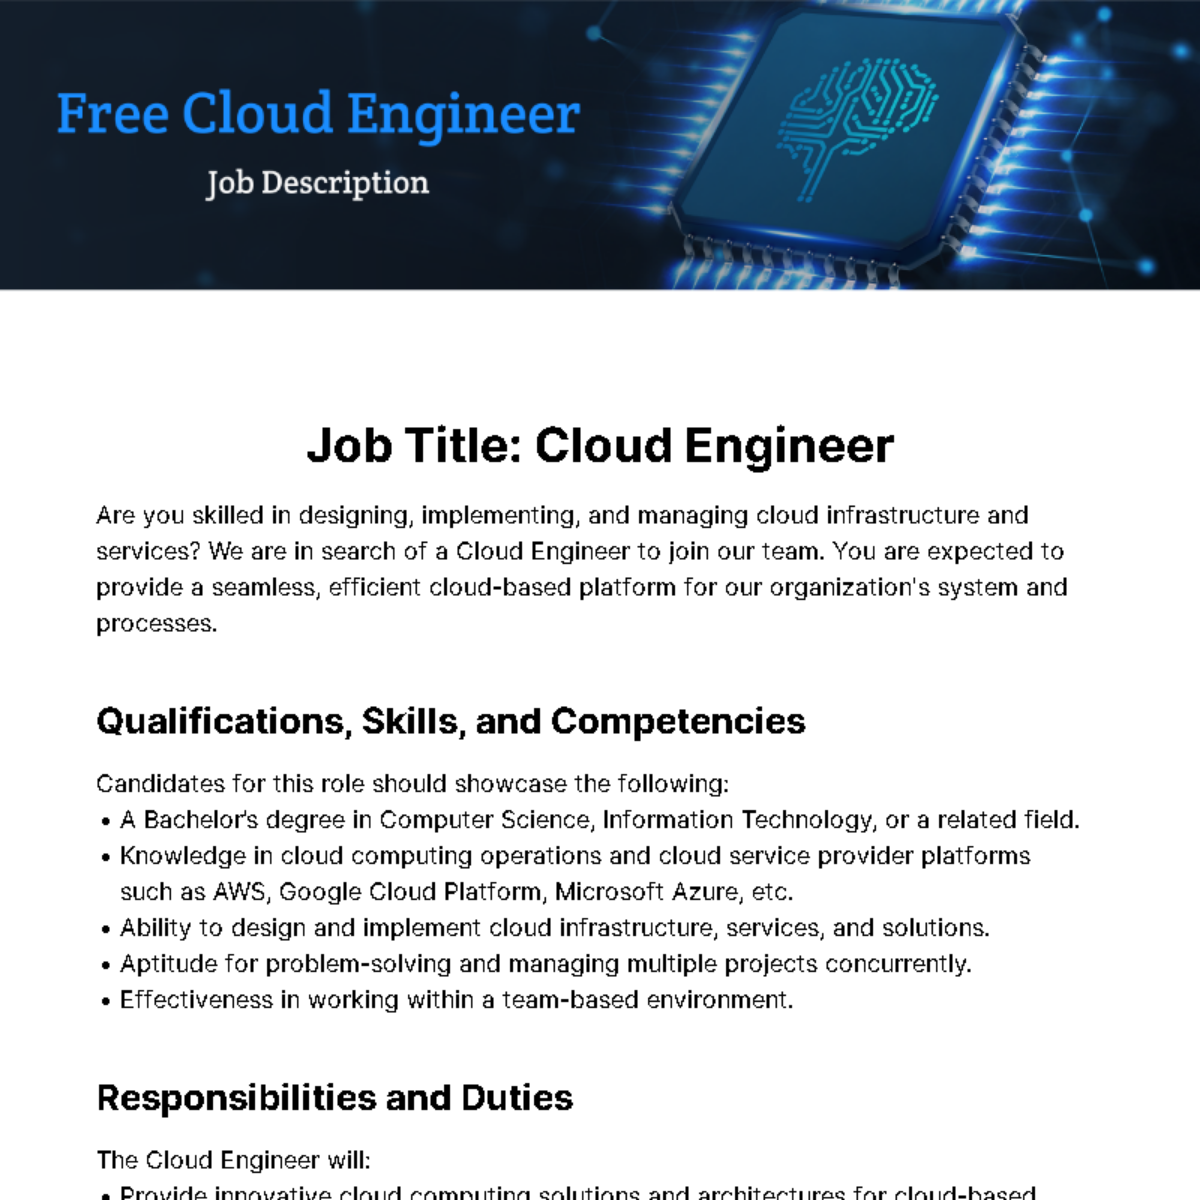 Free Cloud Engineer Job Description Template